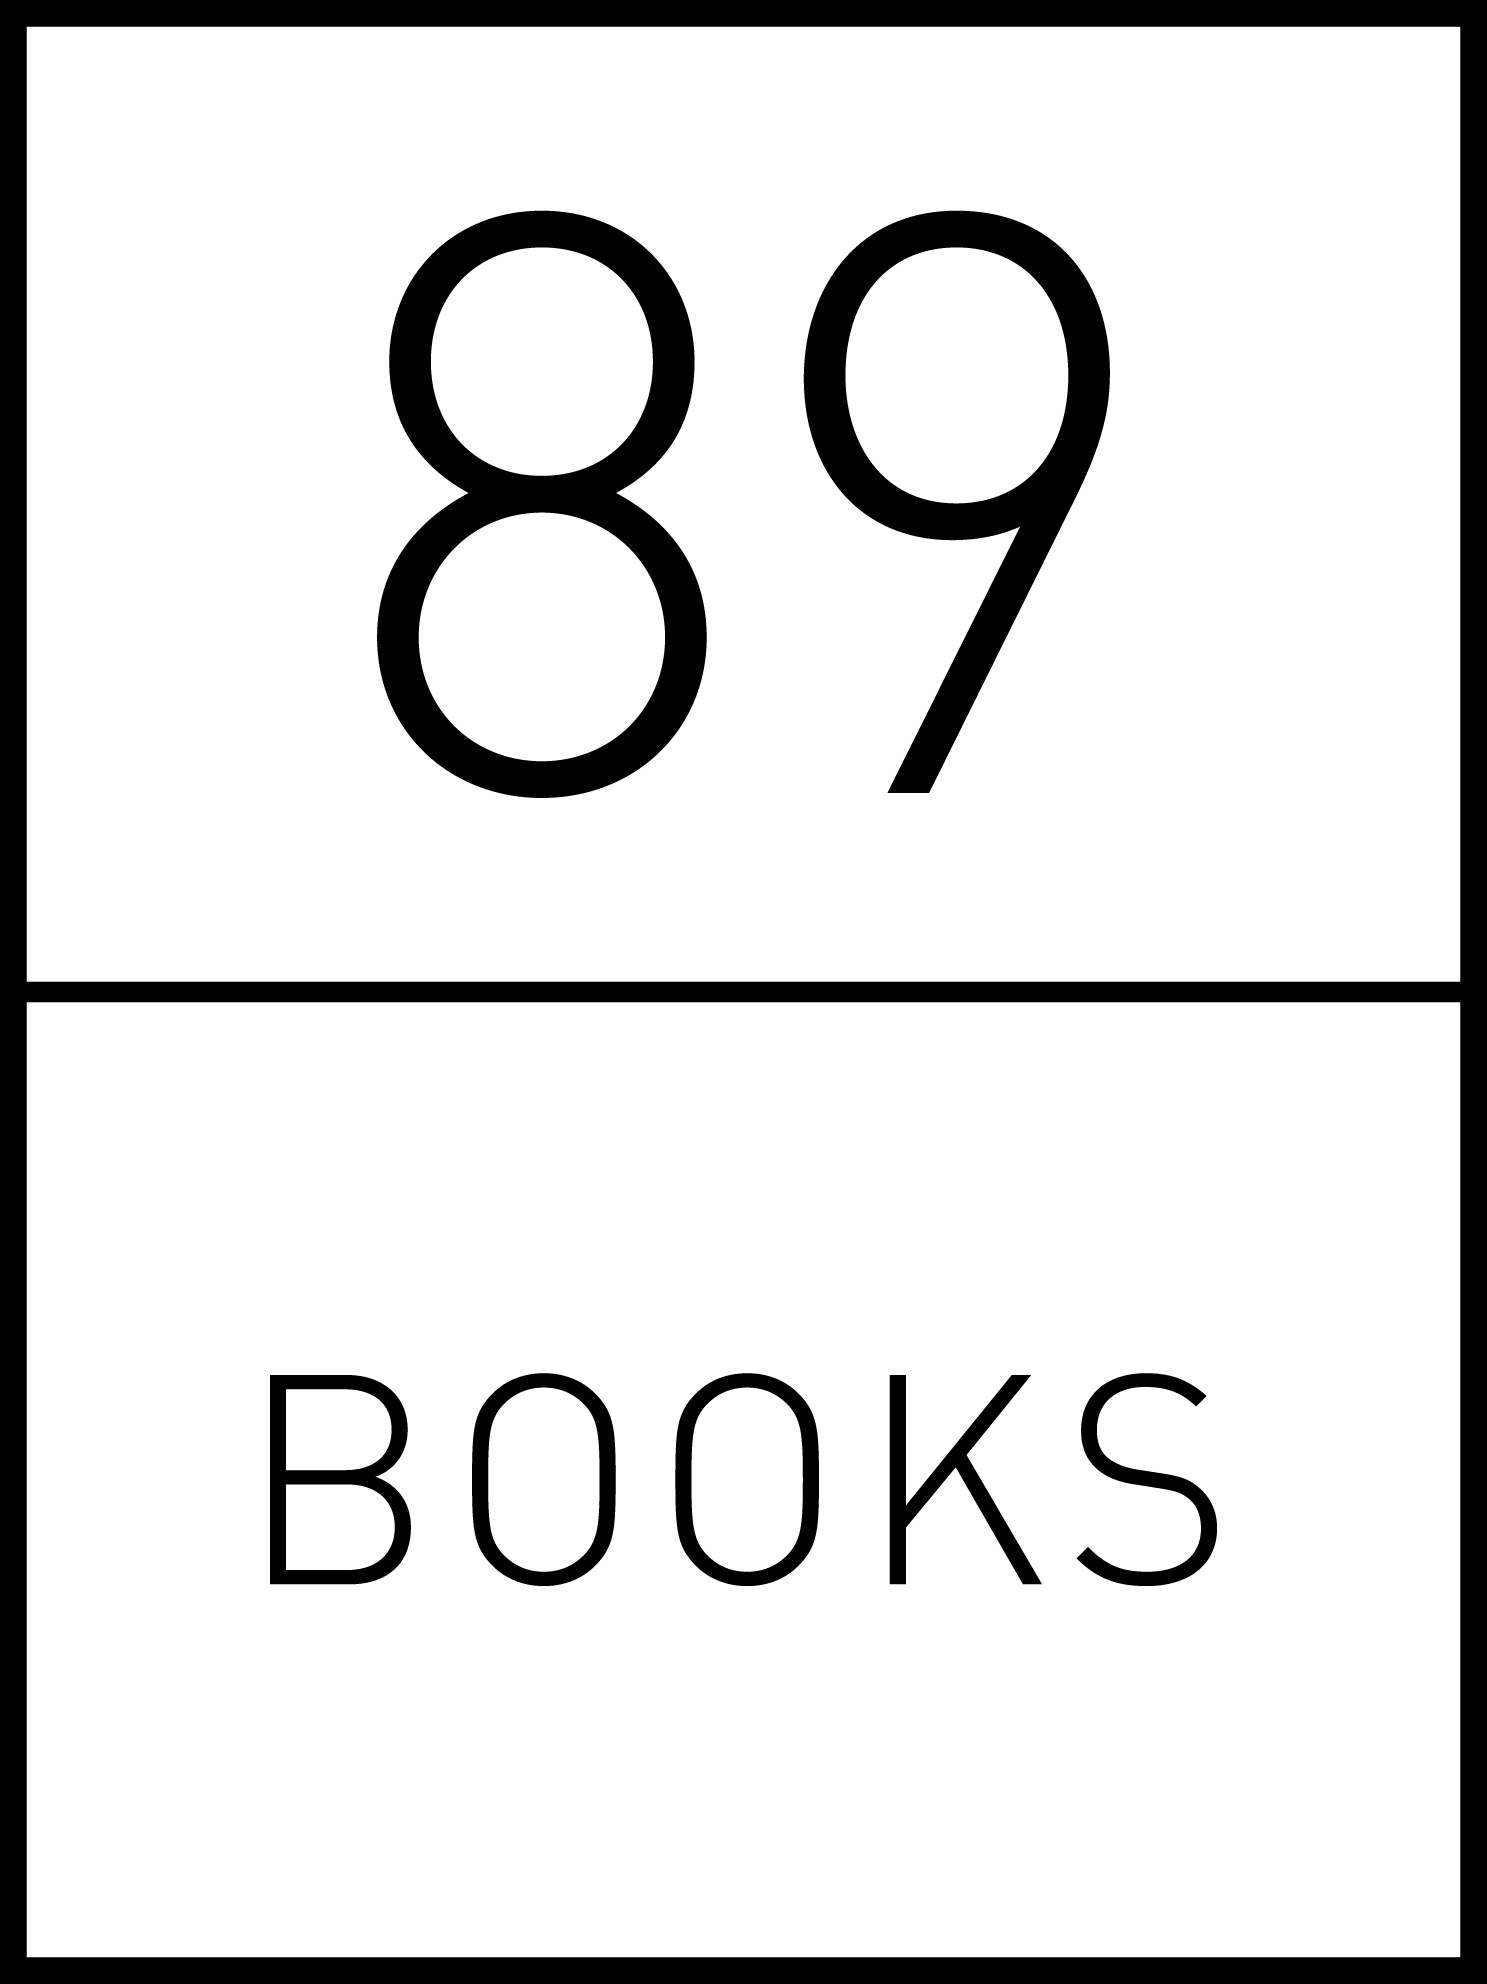 89books